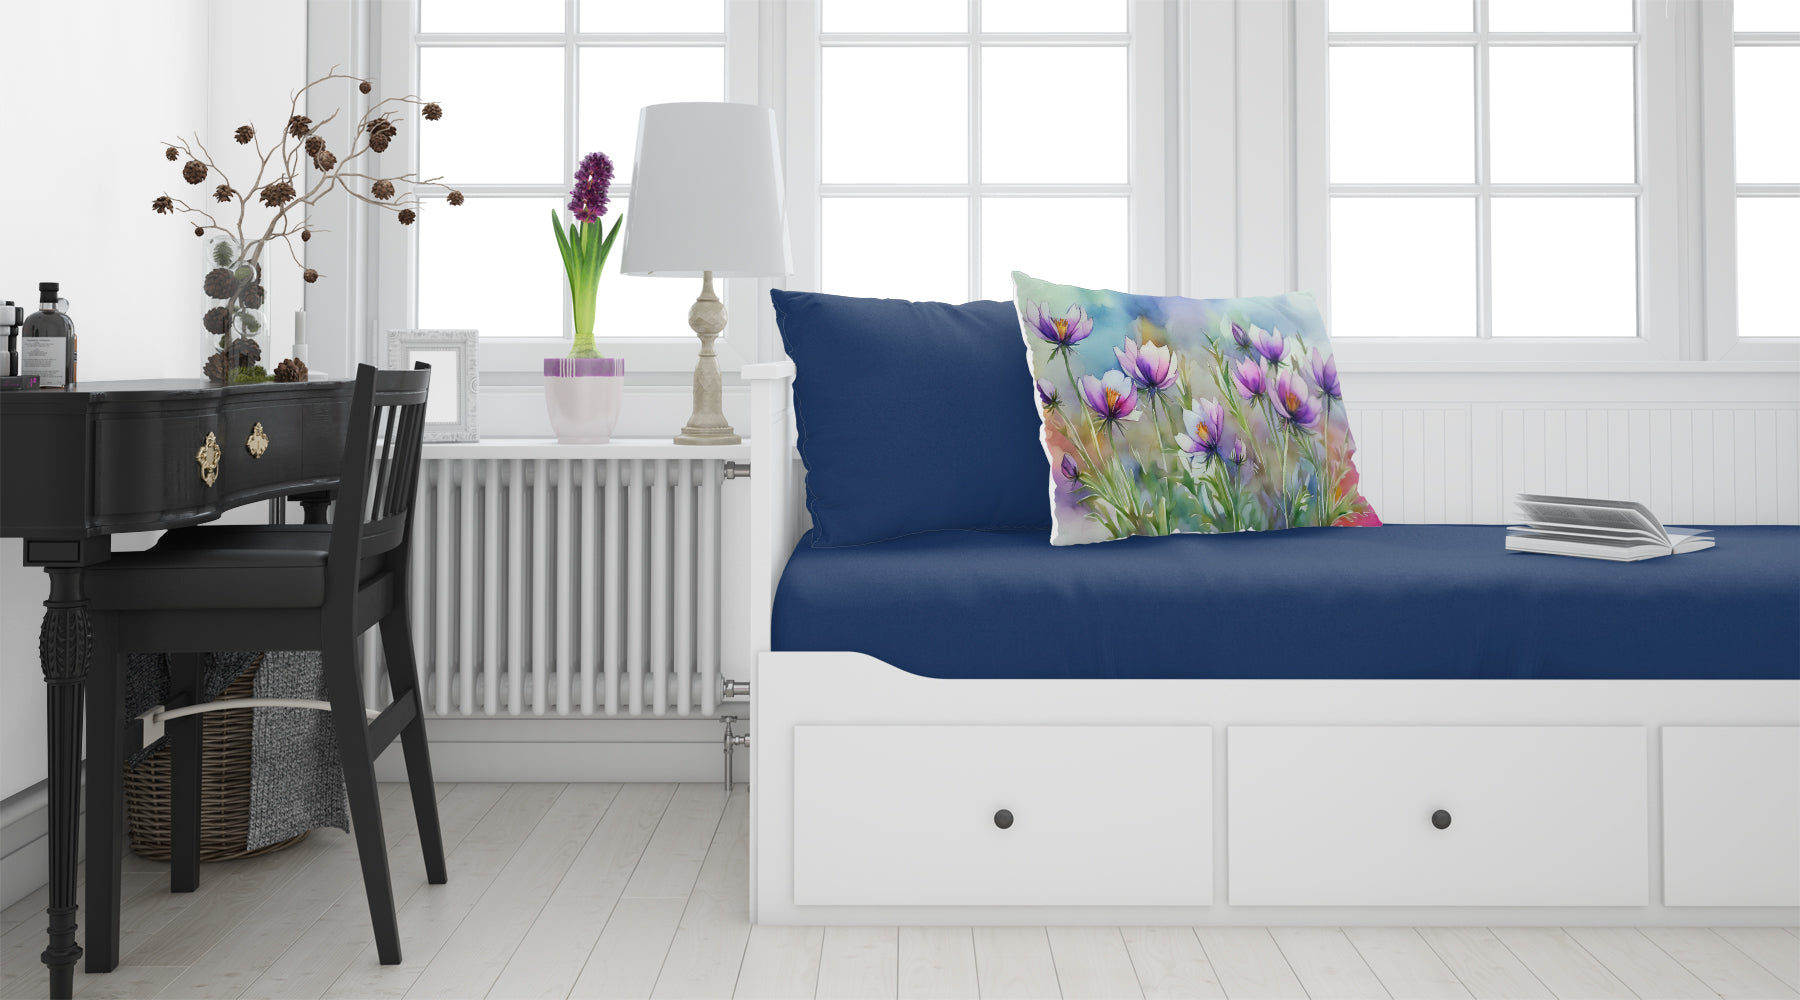 Buy this South Dakota Pasque Flowers in Watercolor Fabric Standard Pillowcase